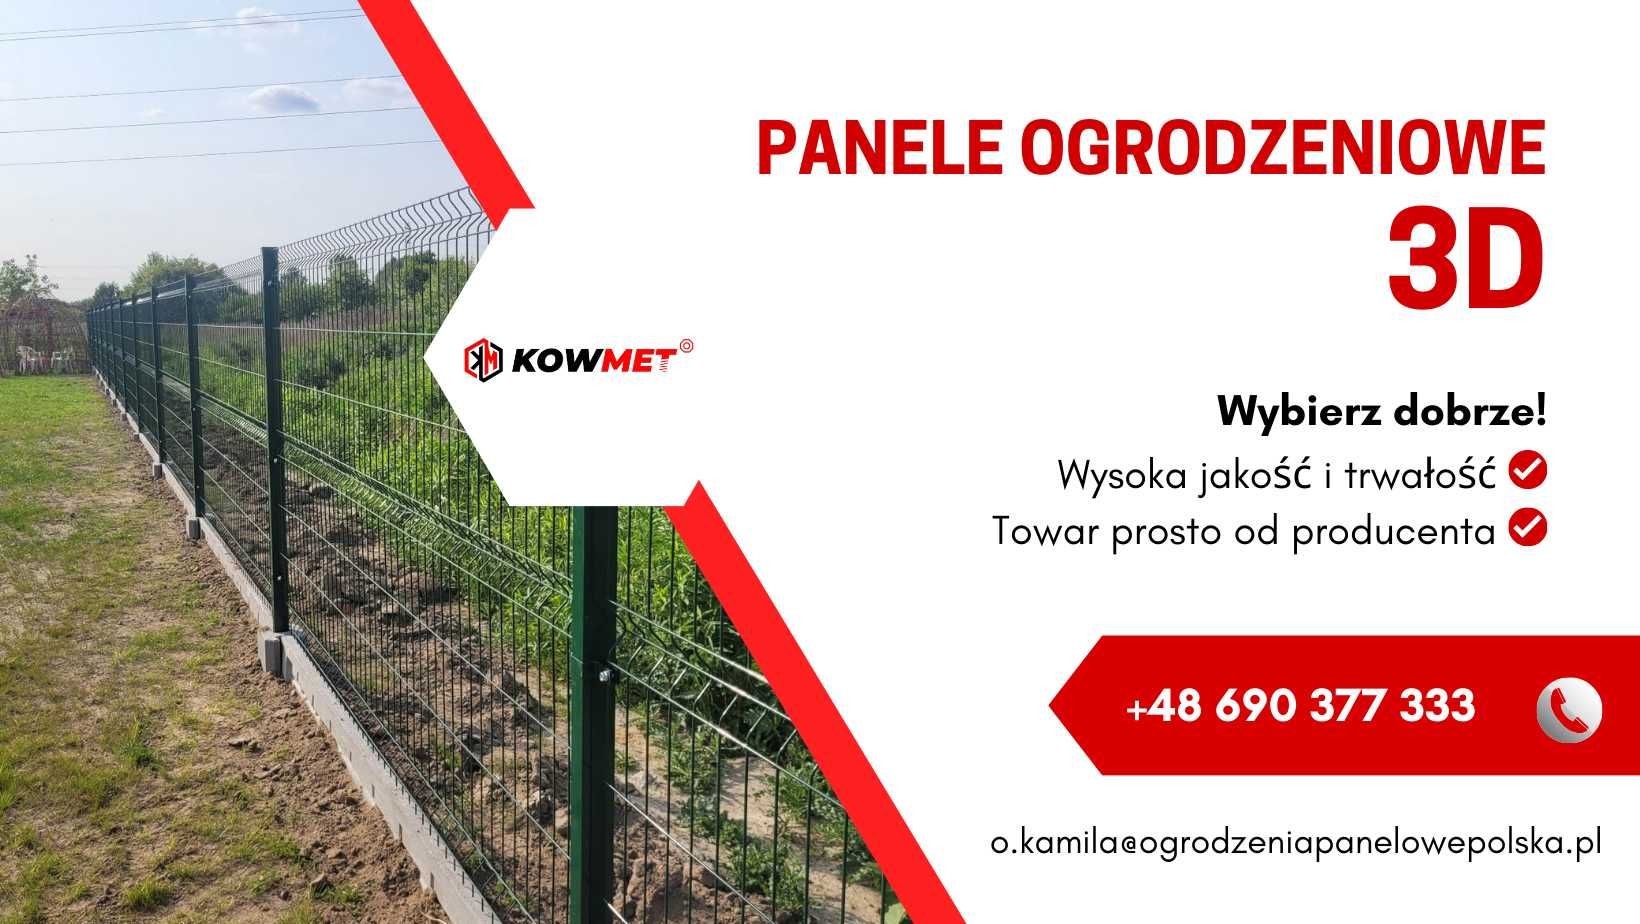 Polski producent ogrodzeń panelowych 3D